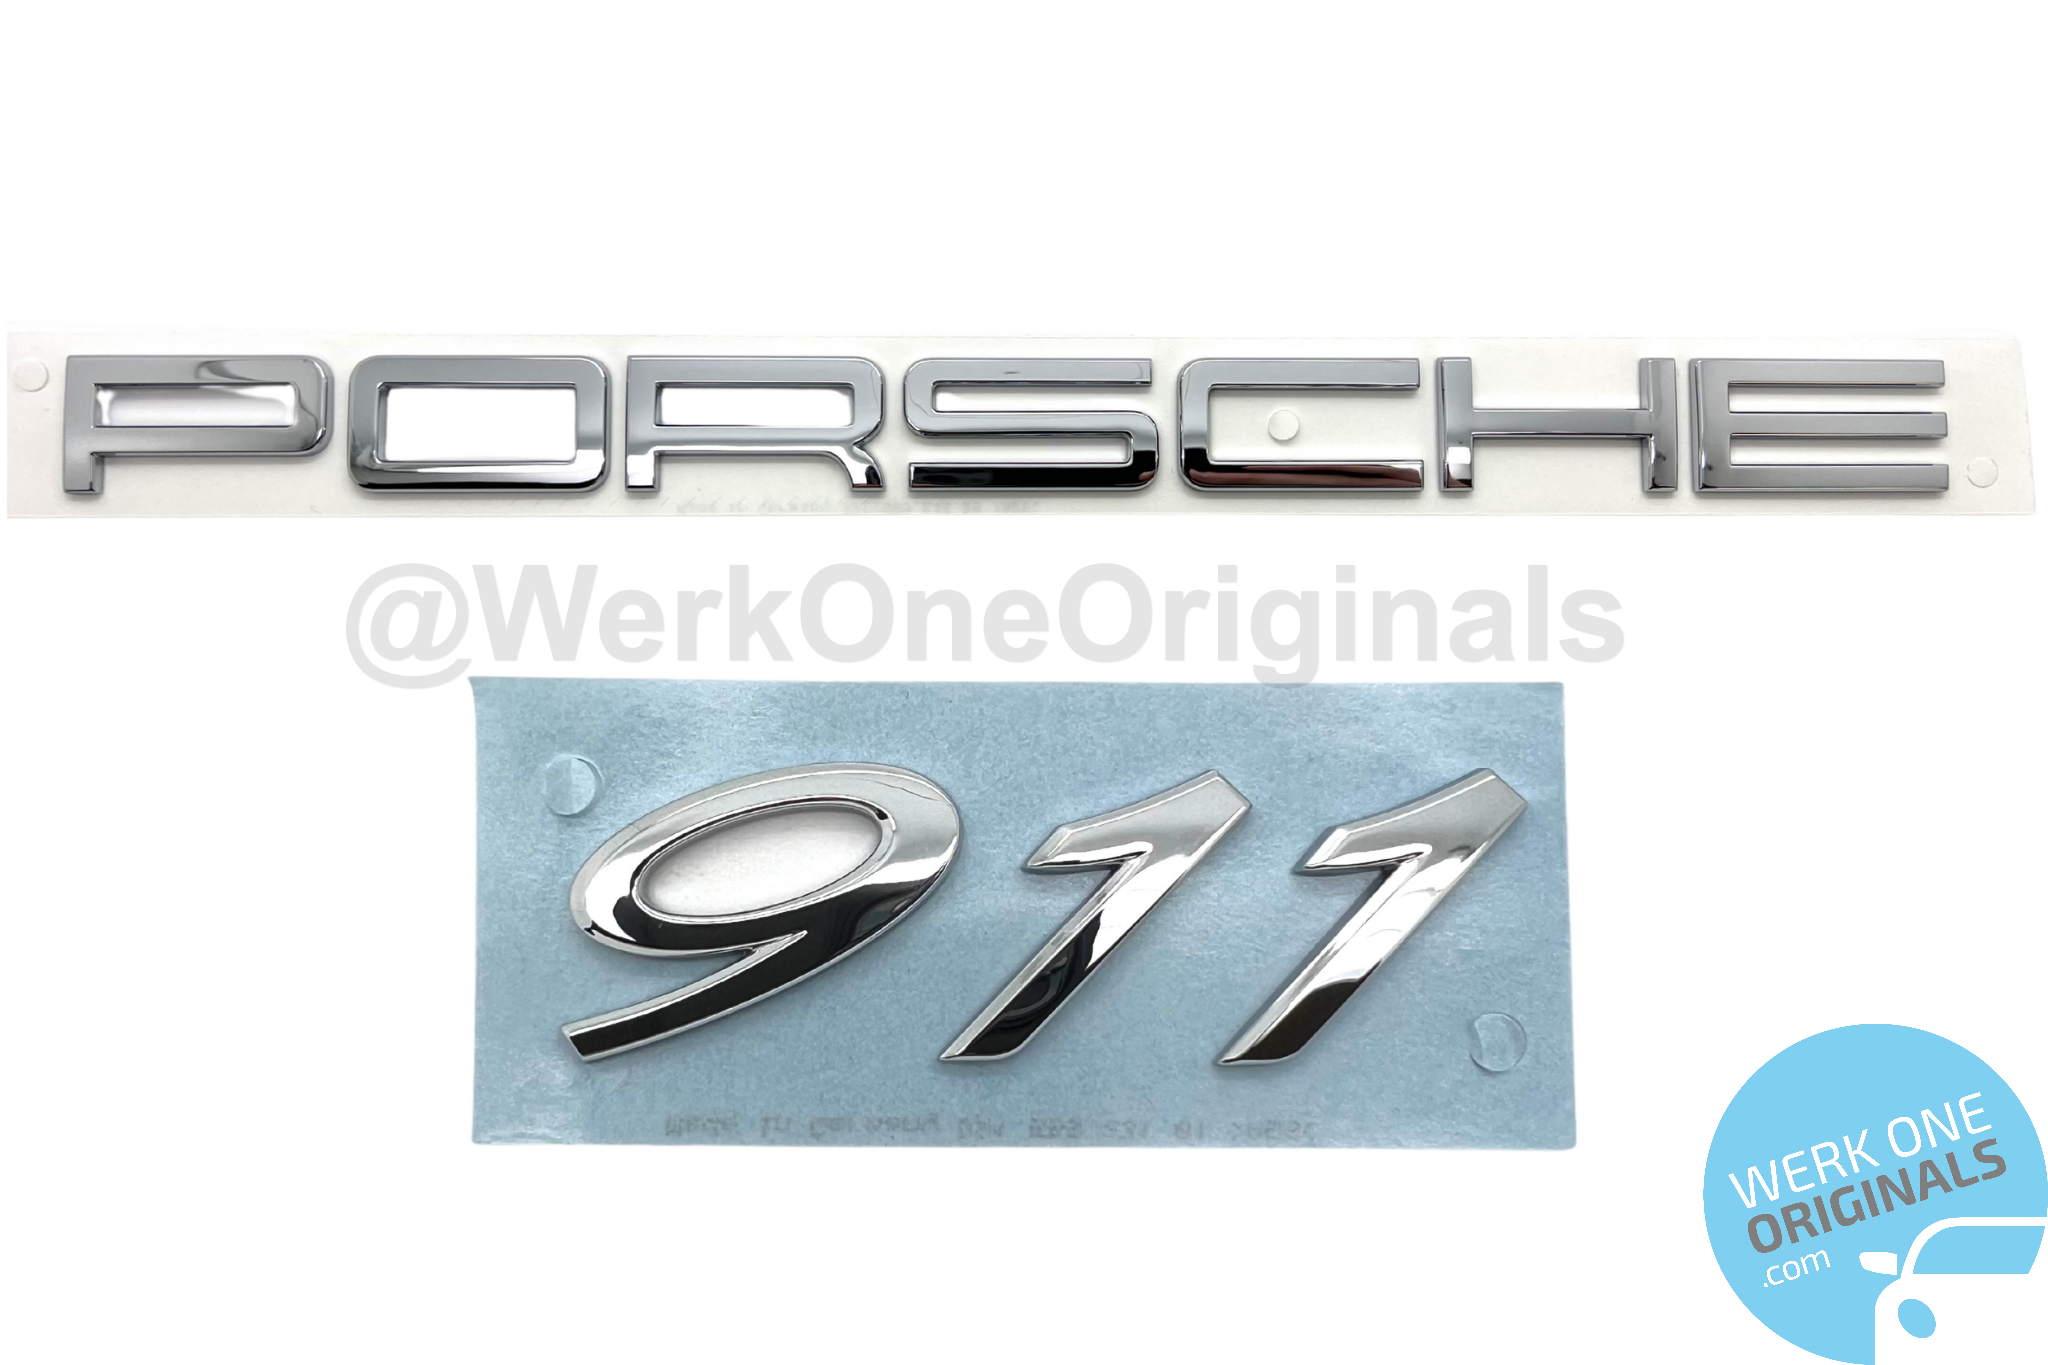 Porsche Official 'Porsche 911' Rear Badge Decal in Chrome Silver for 911 Type 991 Models